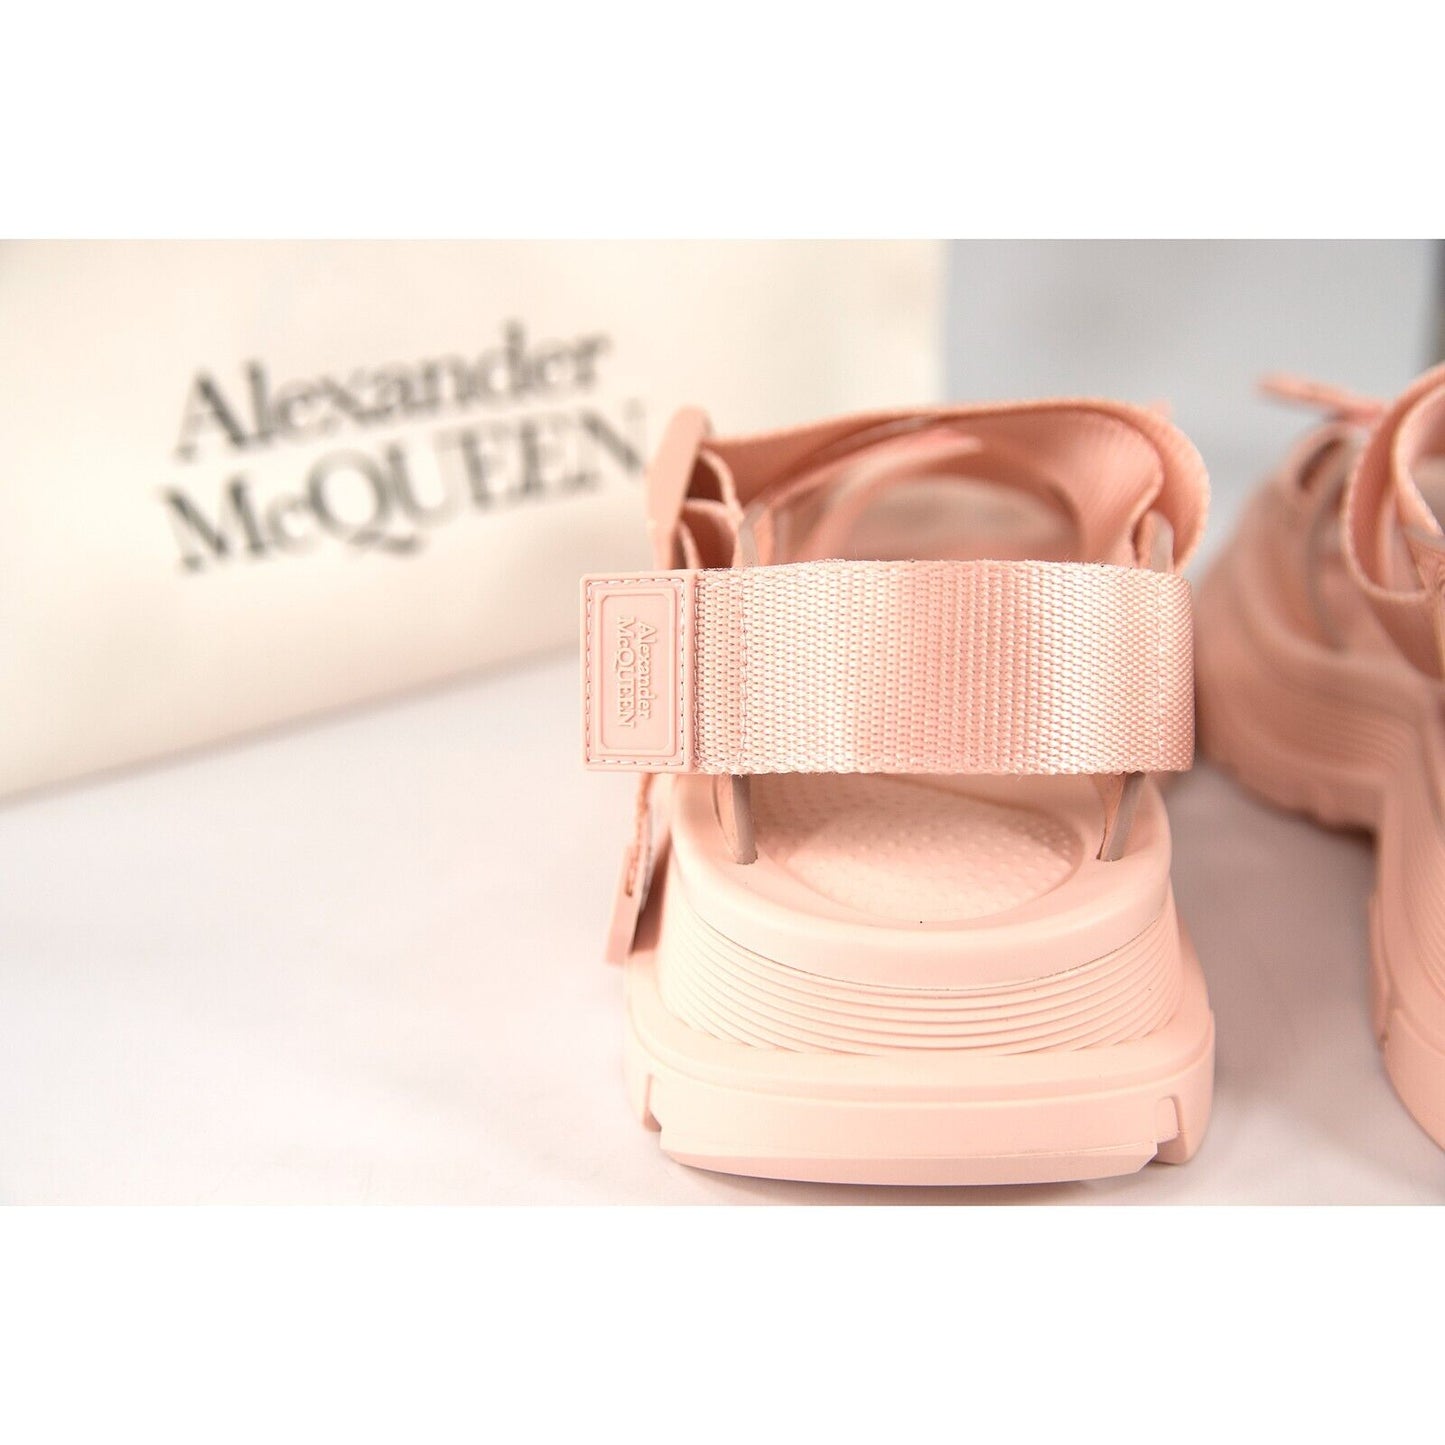 Alexander McQueen Shell Peach Hybrid Tech Leather Webbing Sandals 37 NIB